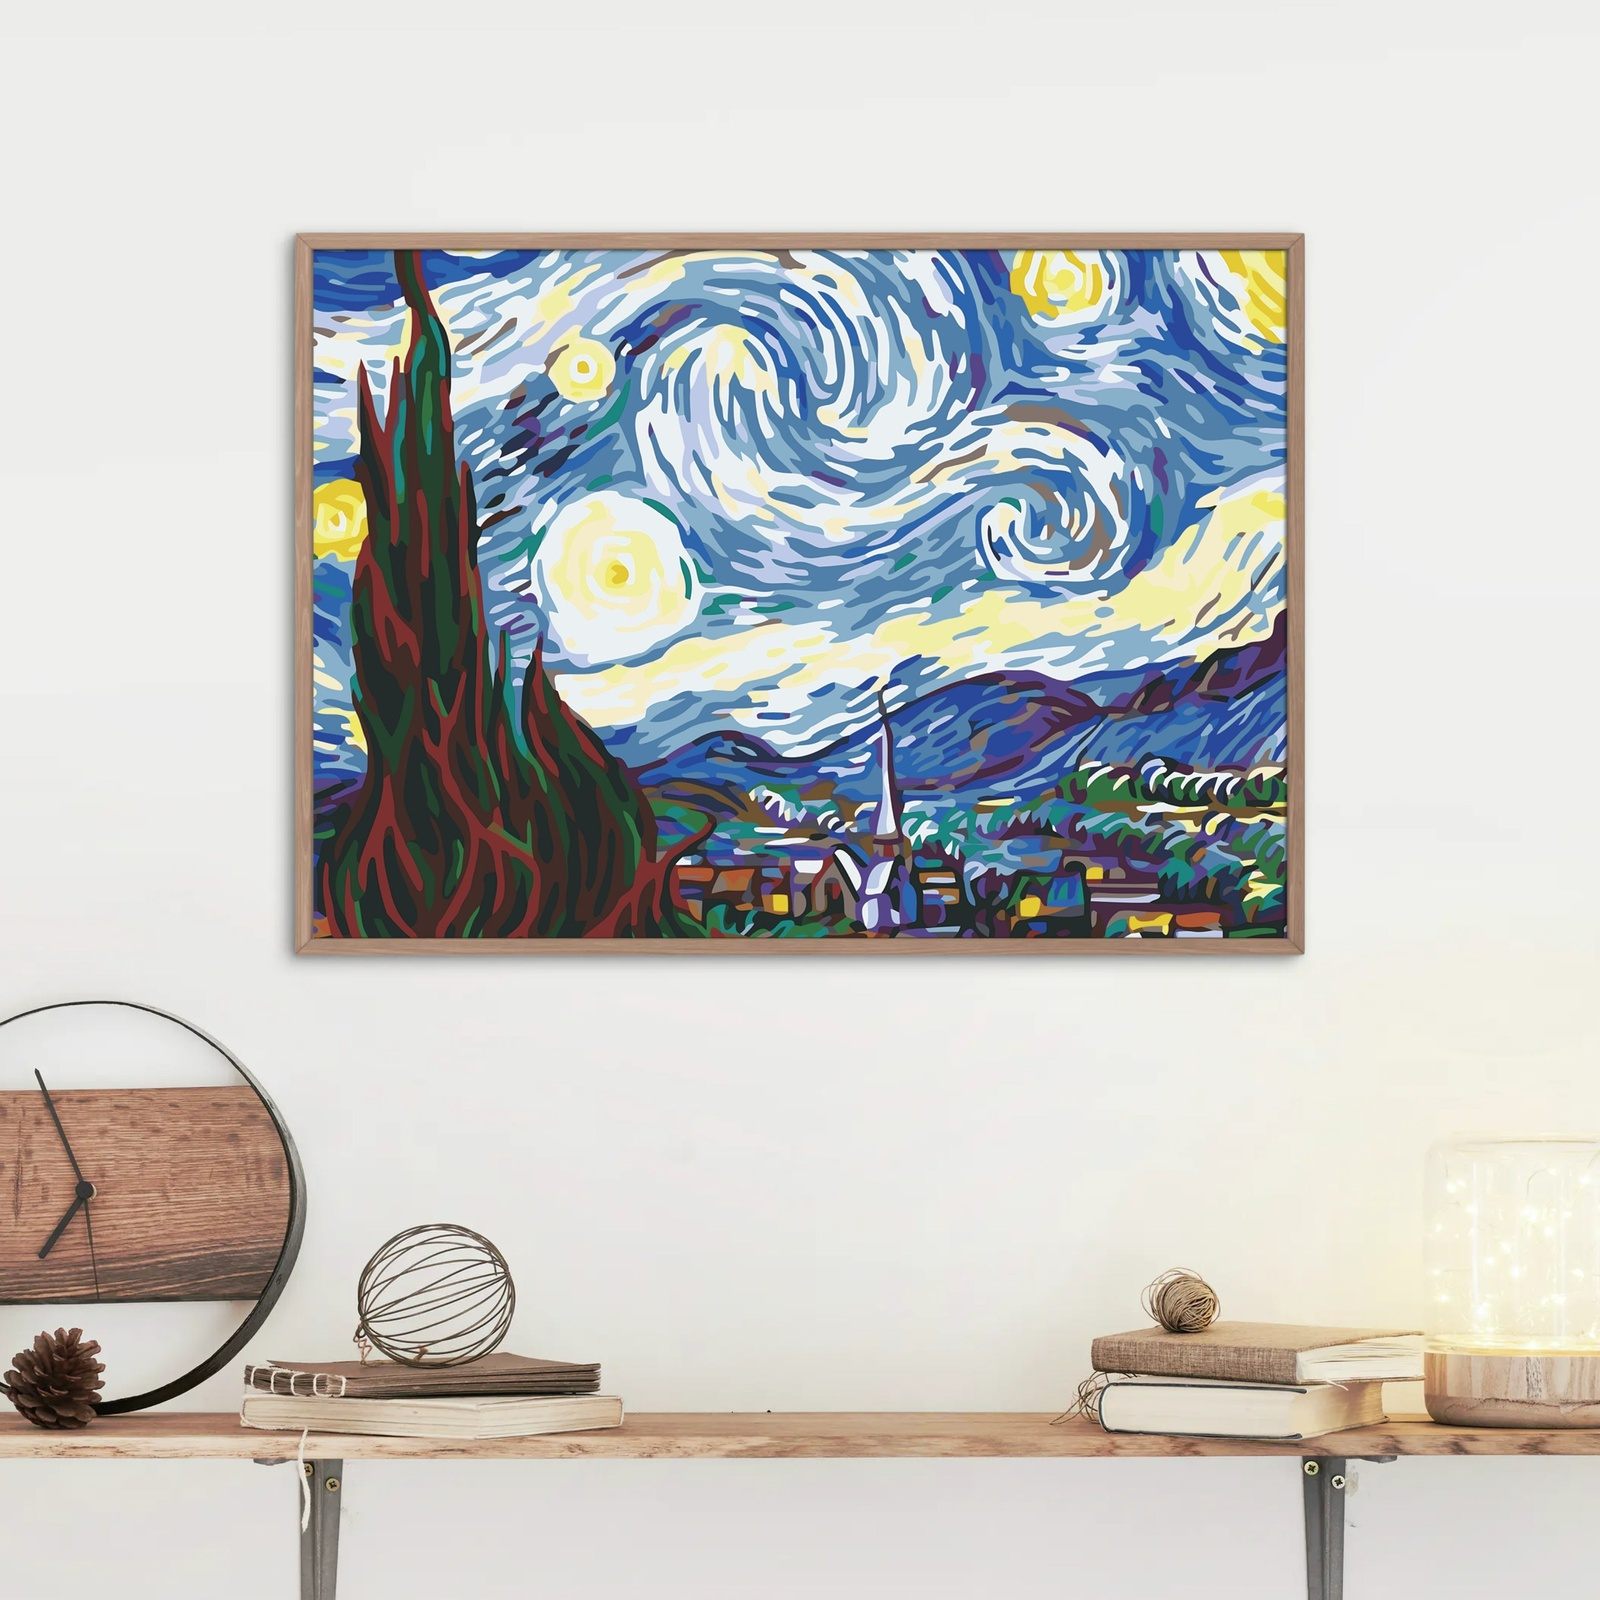 Best Pause De Sterrennacht Vincent van Gogh Schilderen op nummer 40x50 cm - DIY Hobby Pakket